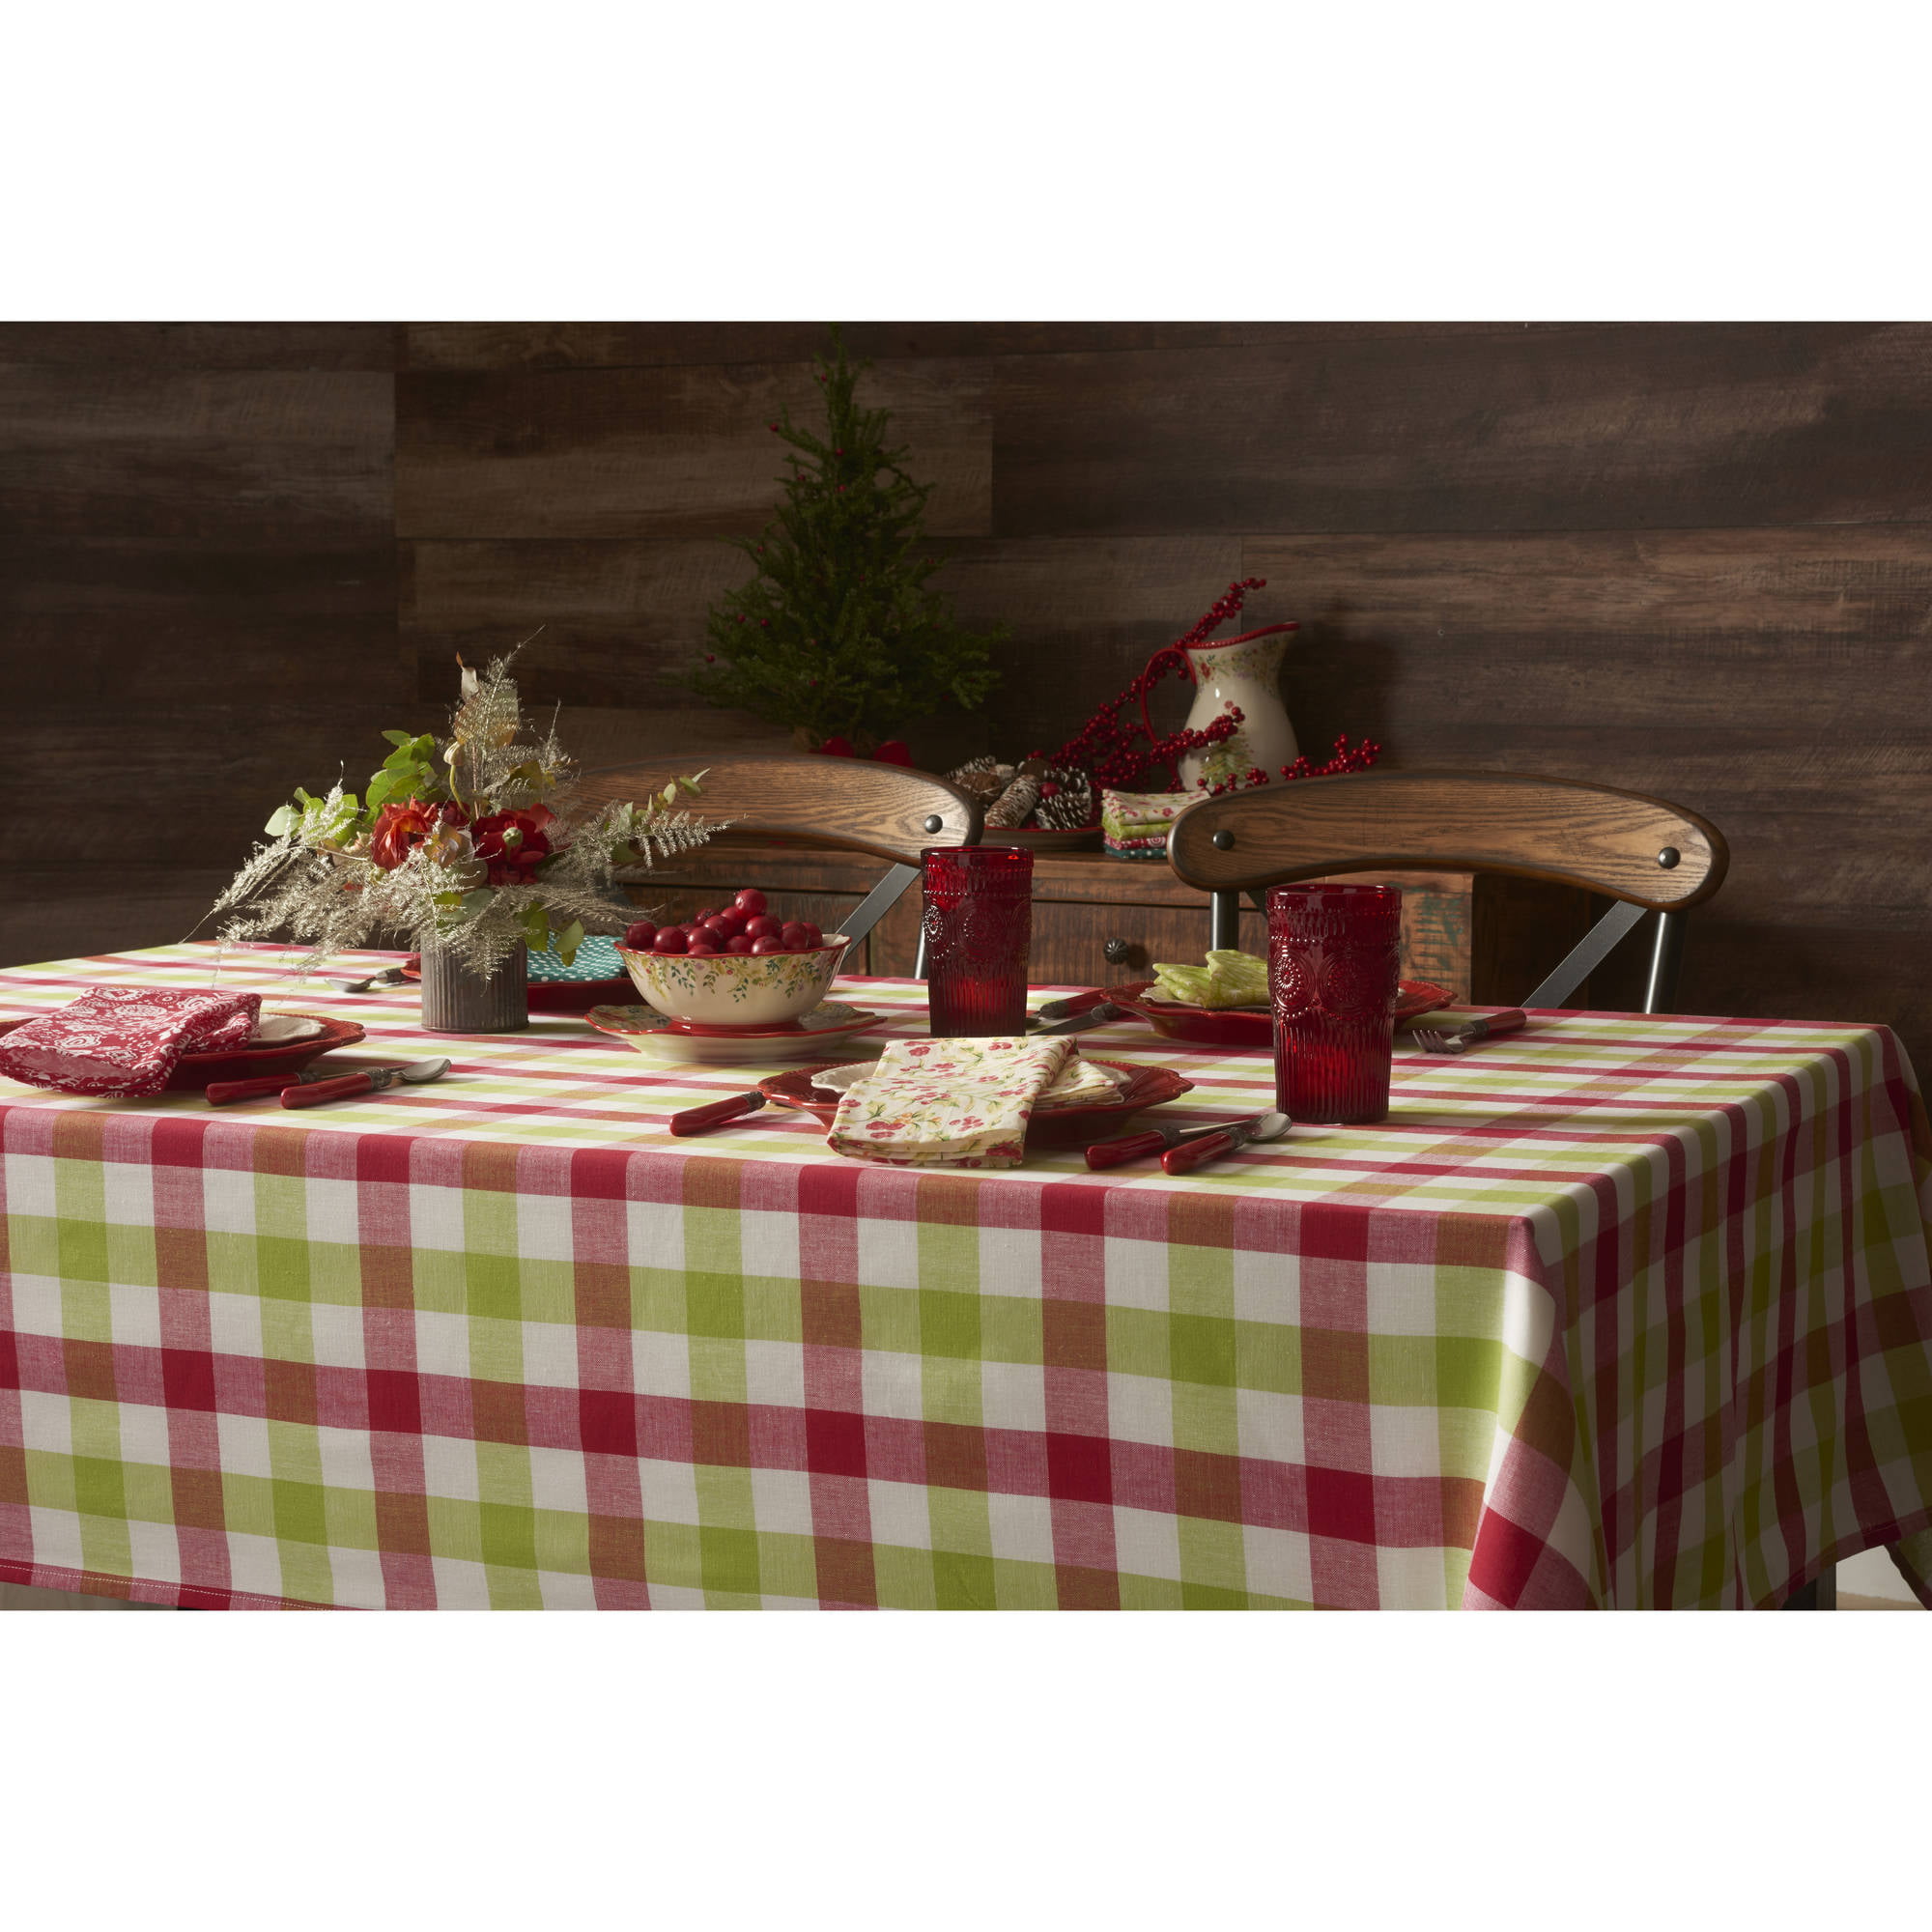 The Pioneer Woman Holiday Charming Check Tablecloth, 60" x 120" - Walmart.com